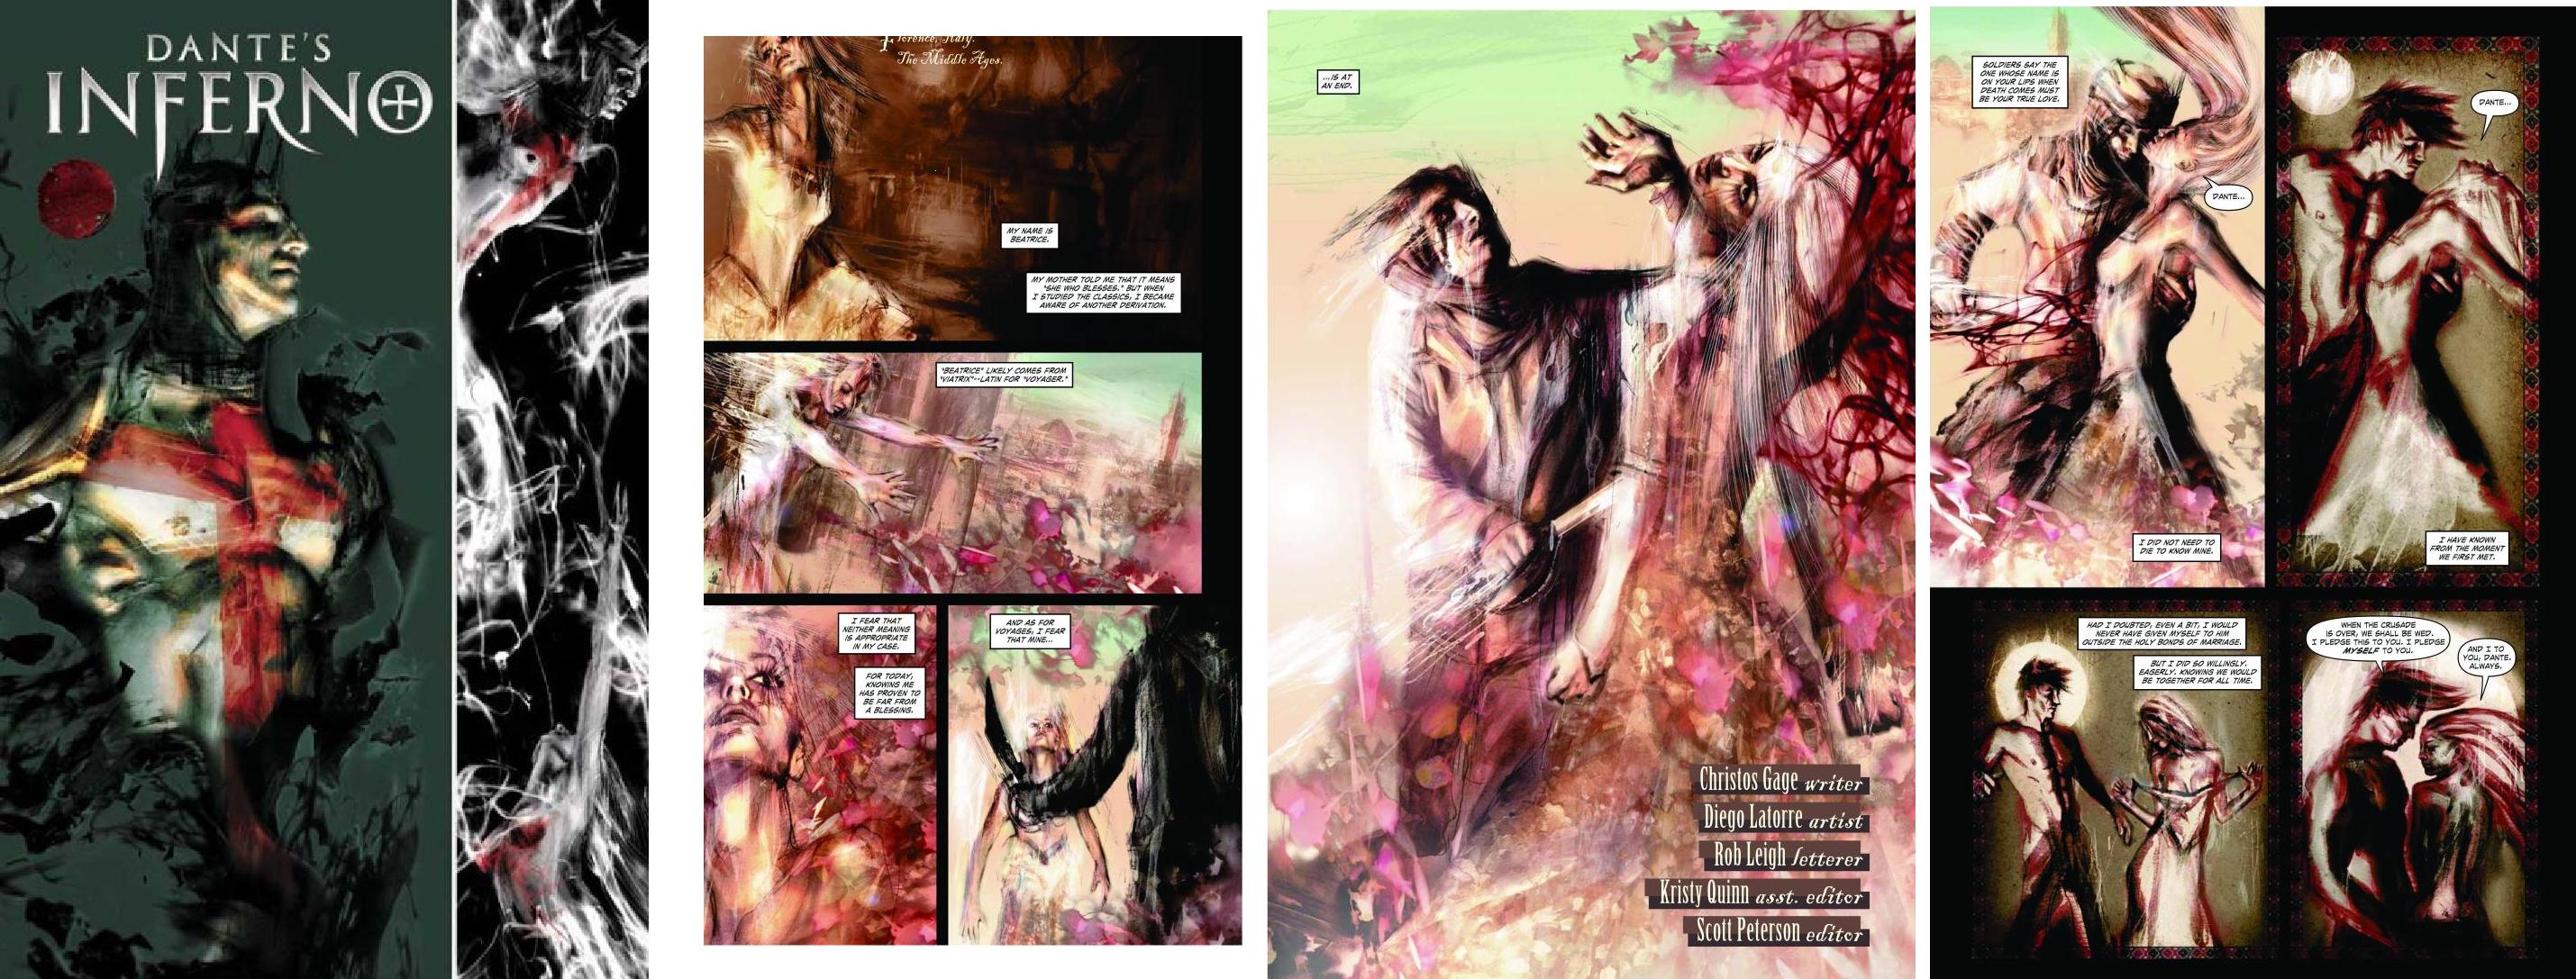 Dante's Inferno #2 (of 6) (English Edition) eBook : Gage, Christos